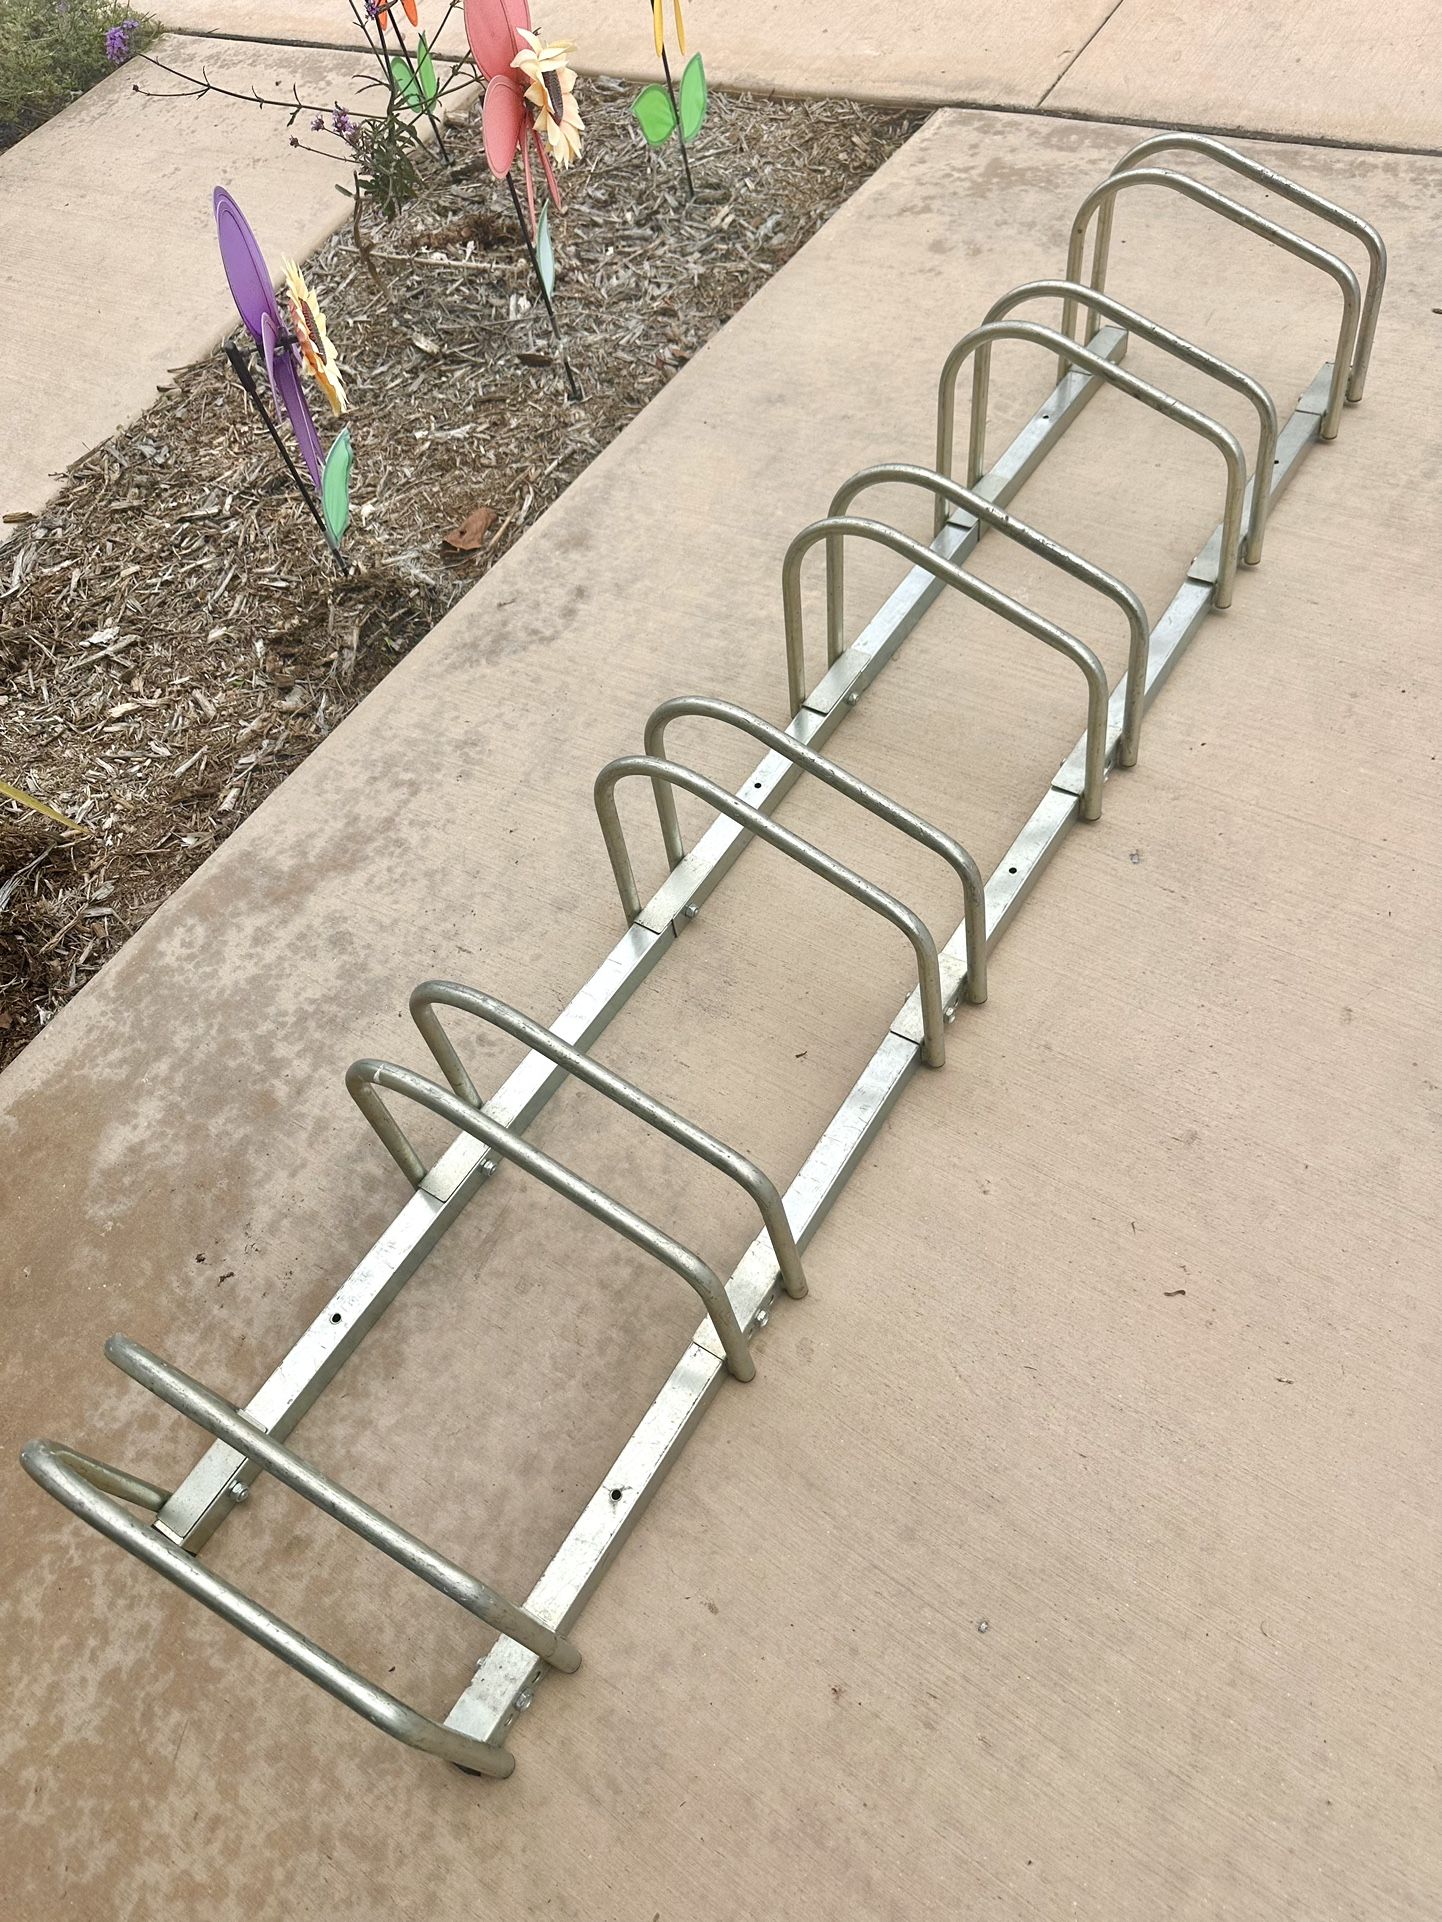 Bike Rack $10